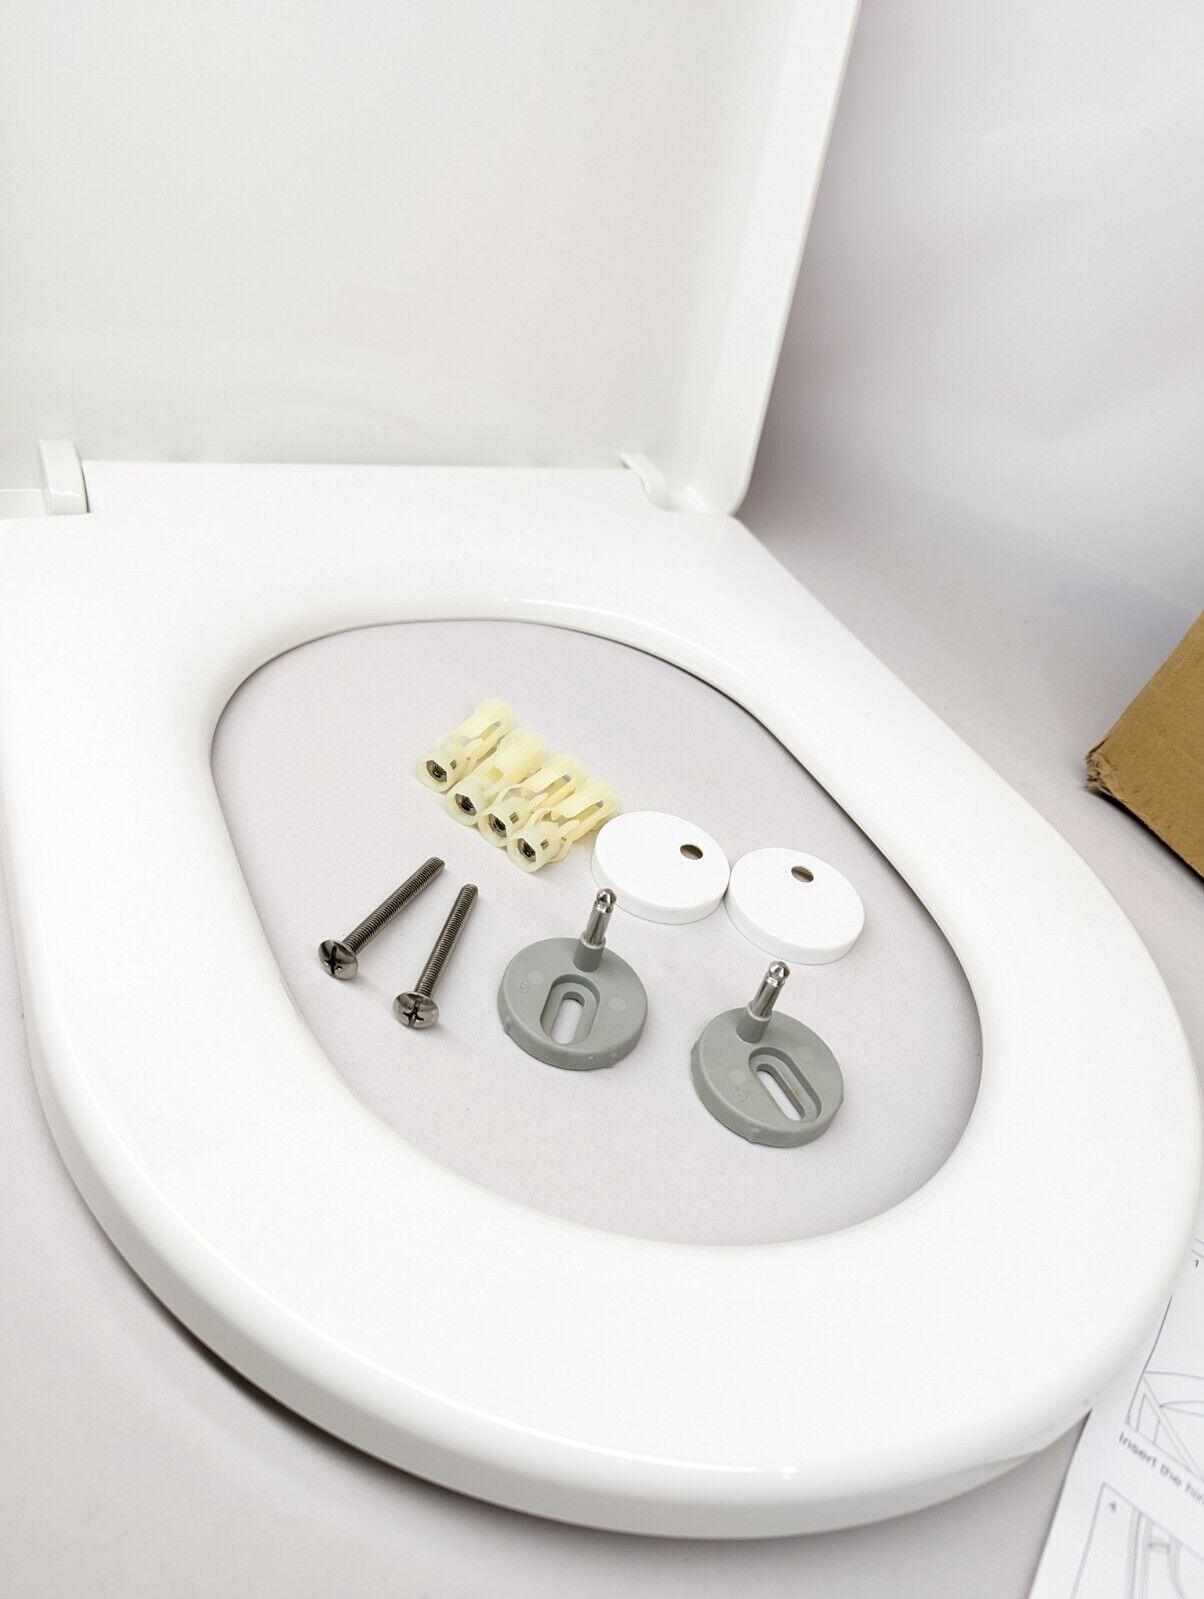 SADALAK Soft Close D-Shaped Toilet Seat Quick Release Hinges, White - Massive Discounts